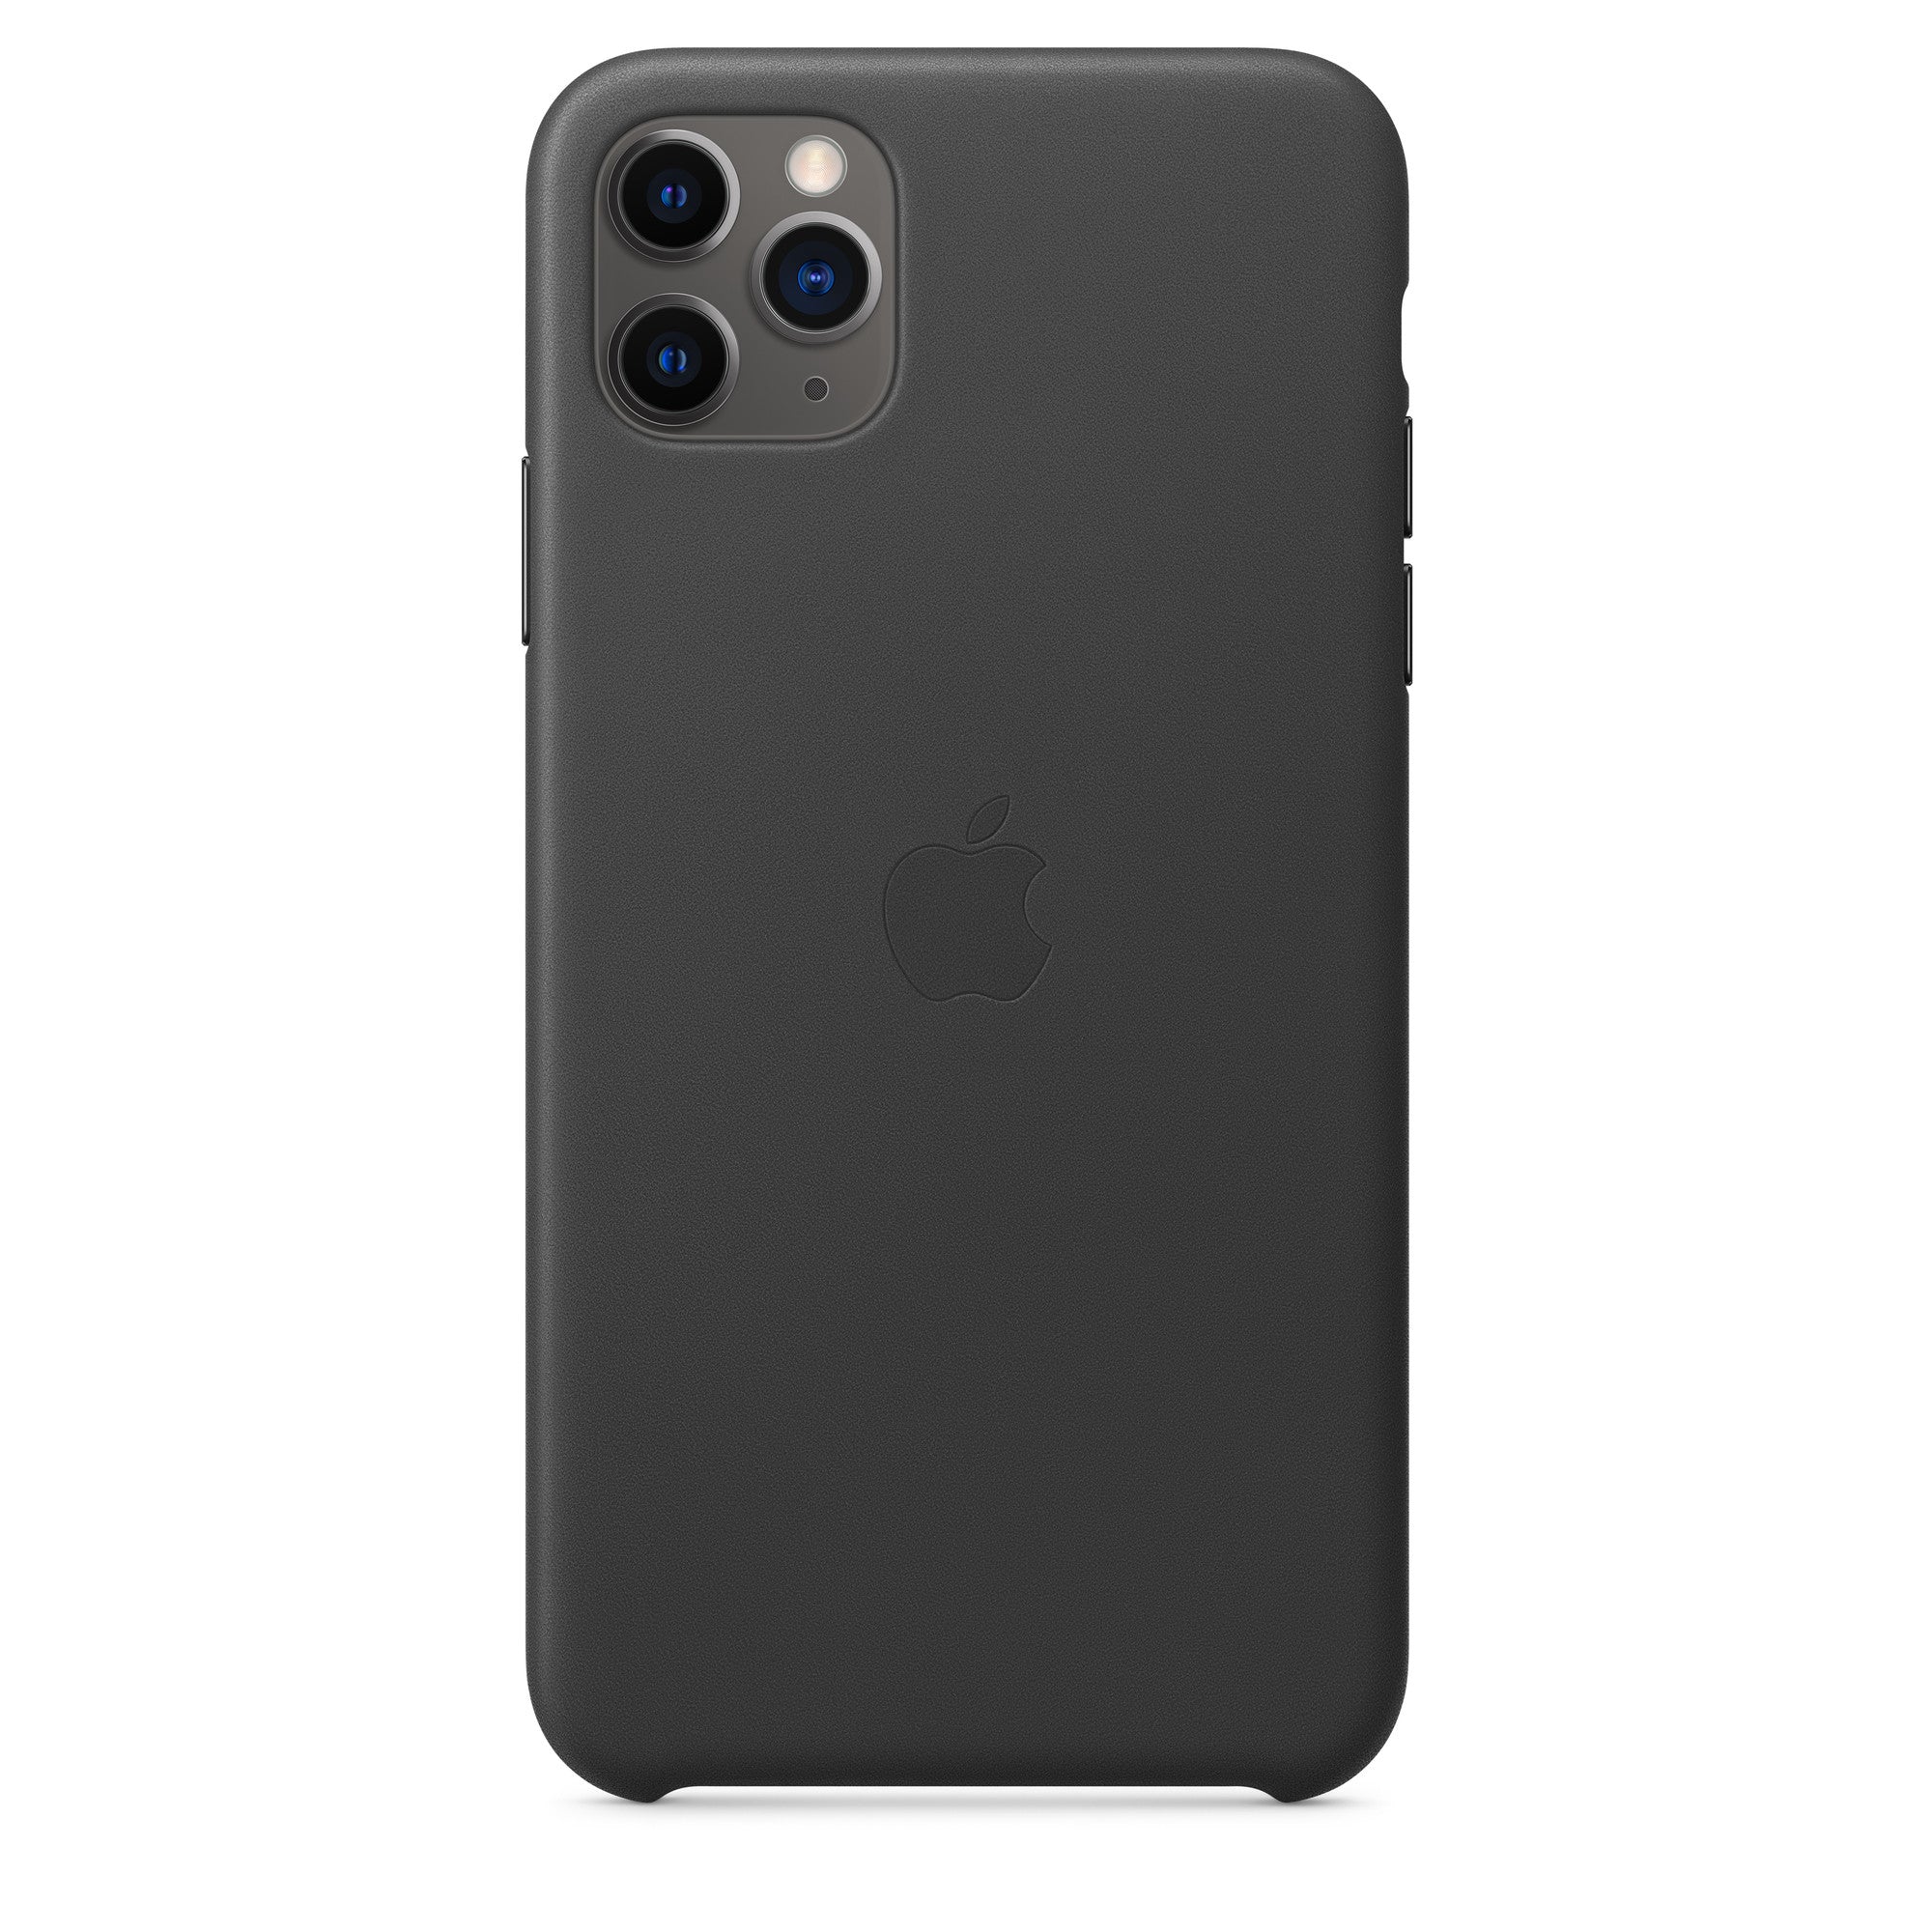 Apple iPhone 11 Pro Max Leather Case Black Black New - Sealed